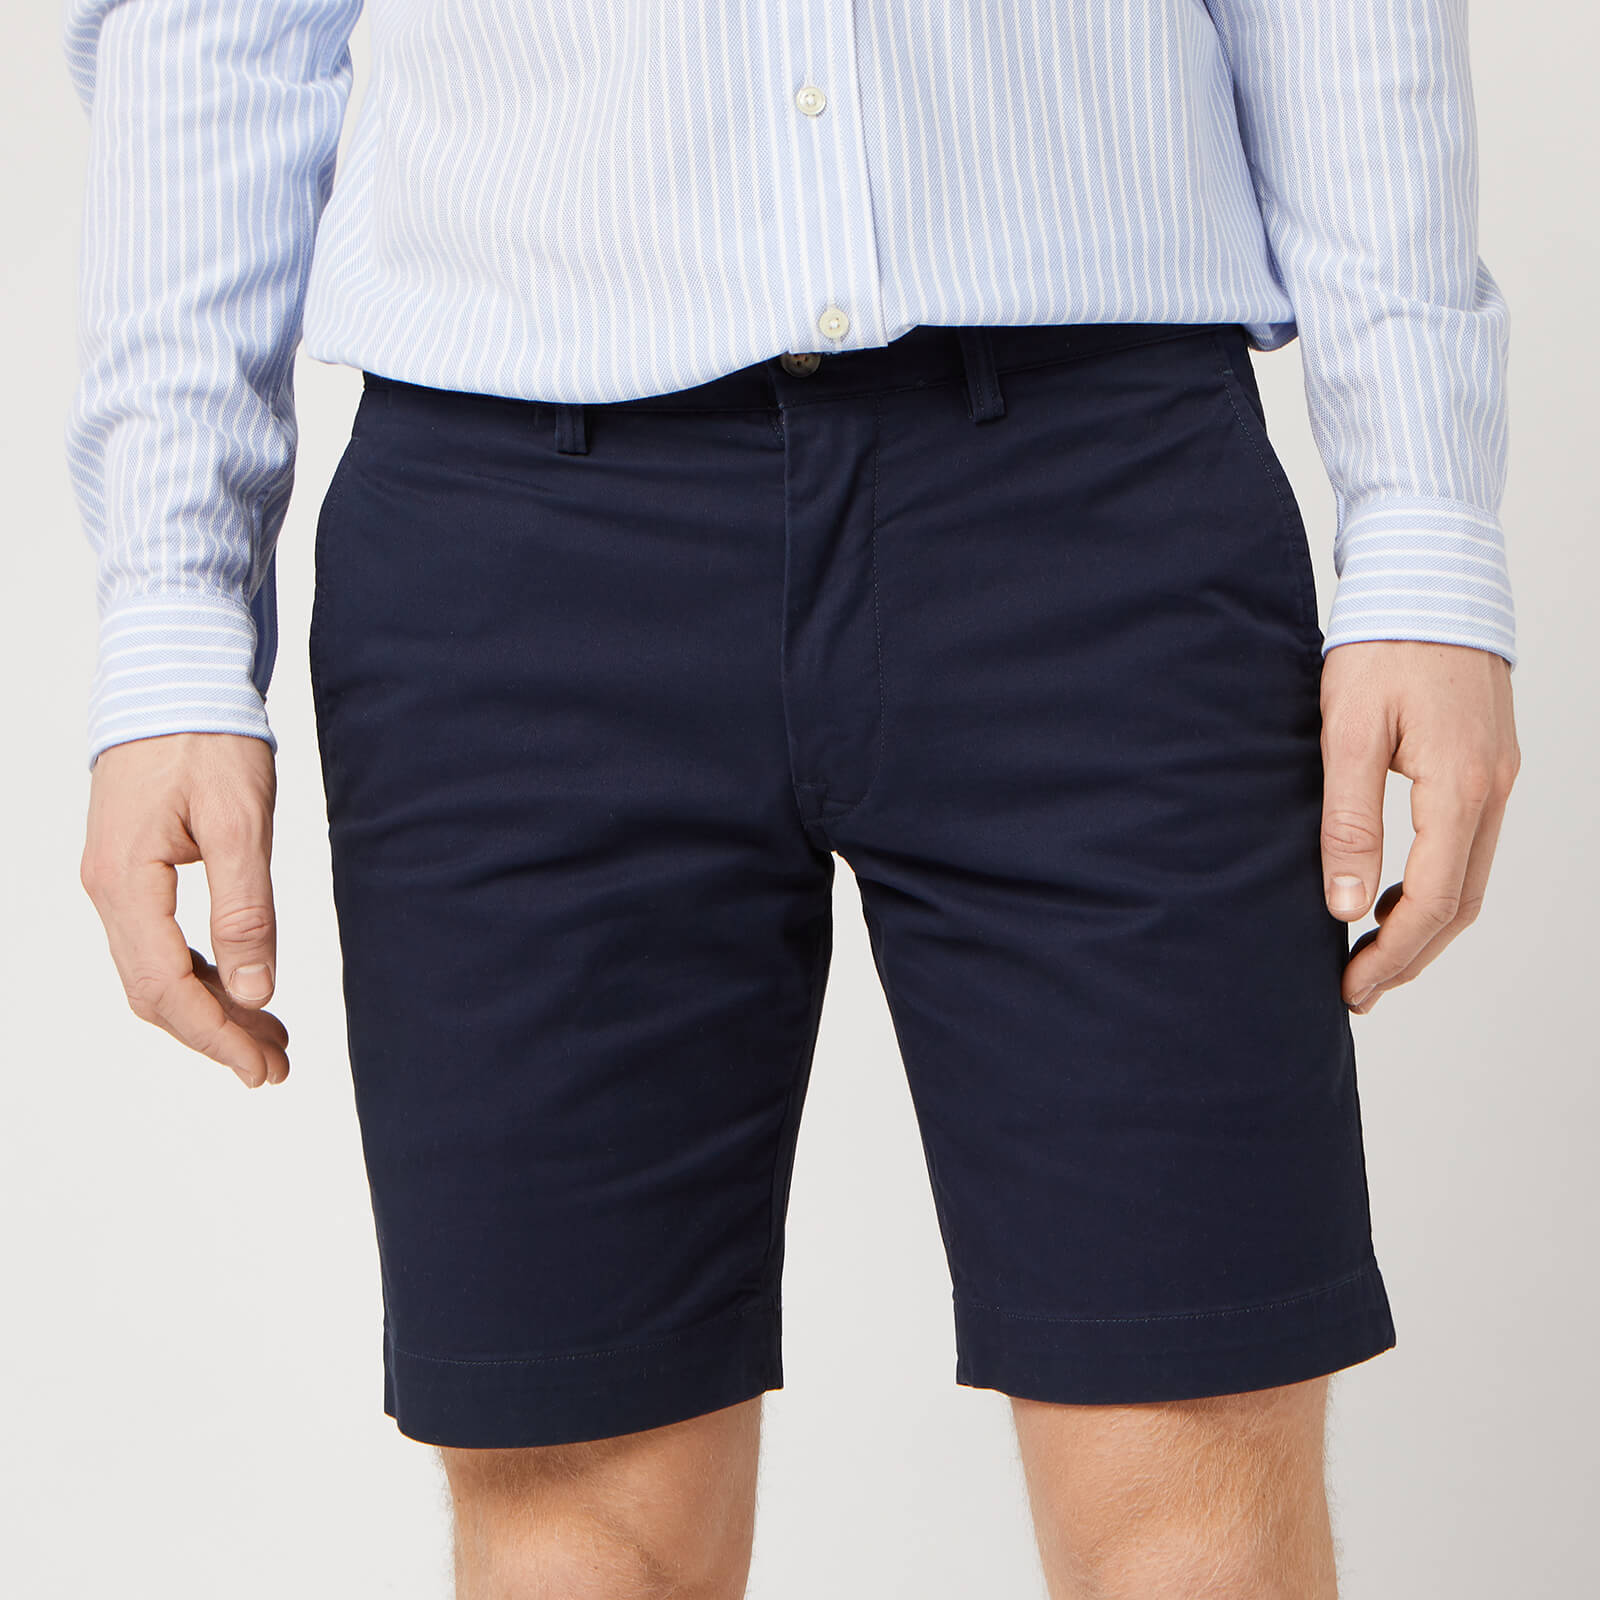 polo ralph lauren bedford shorts